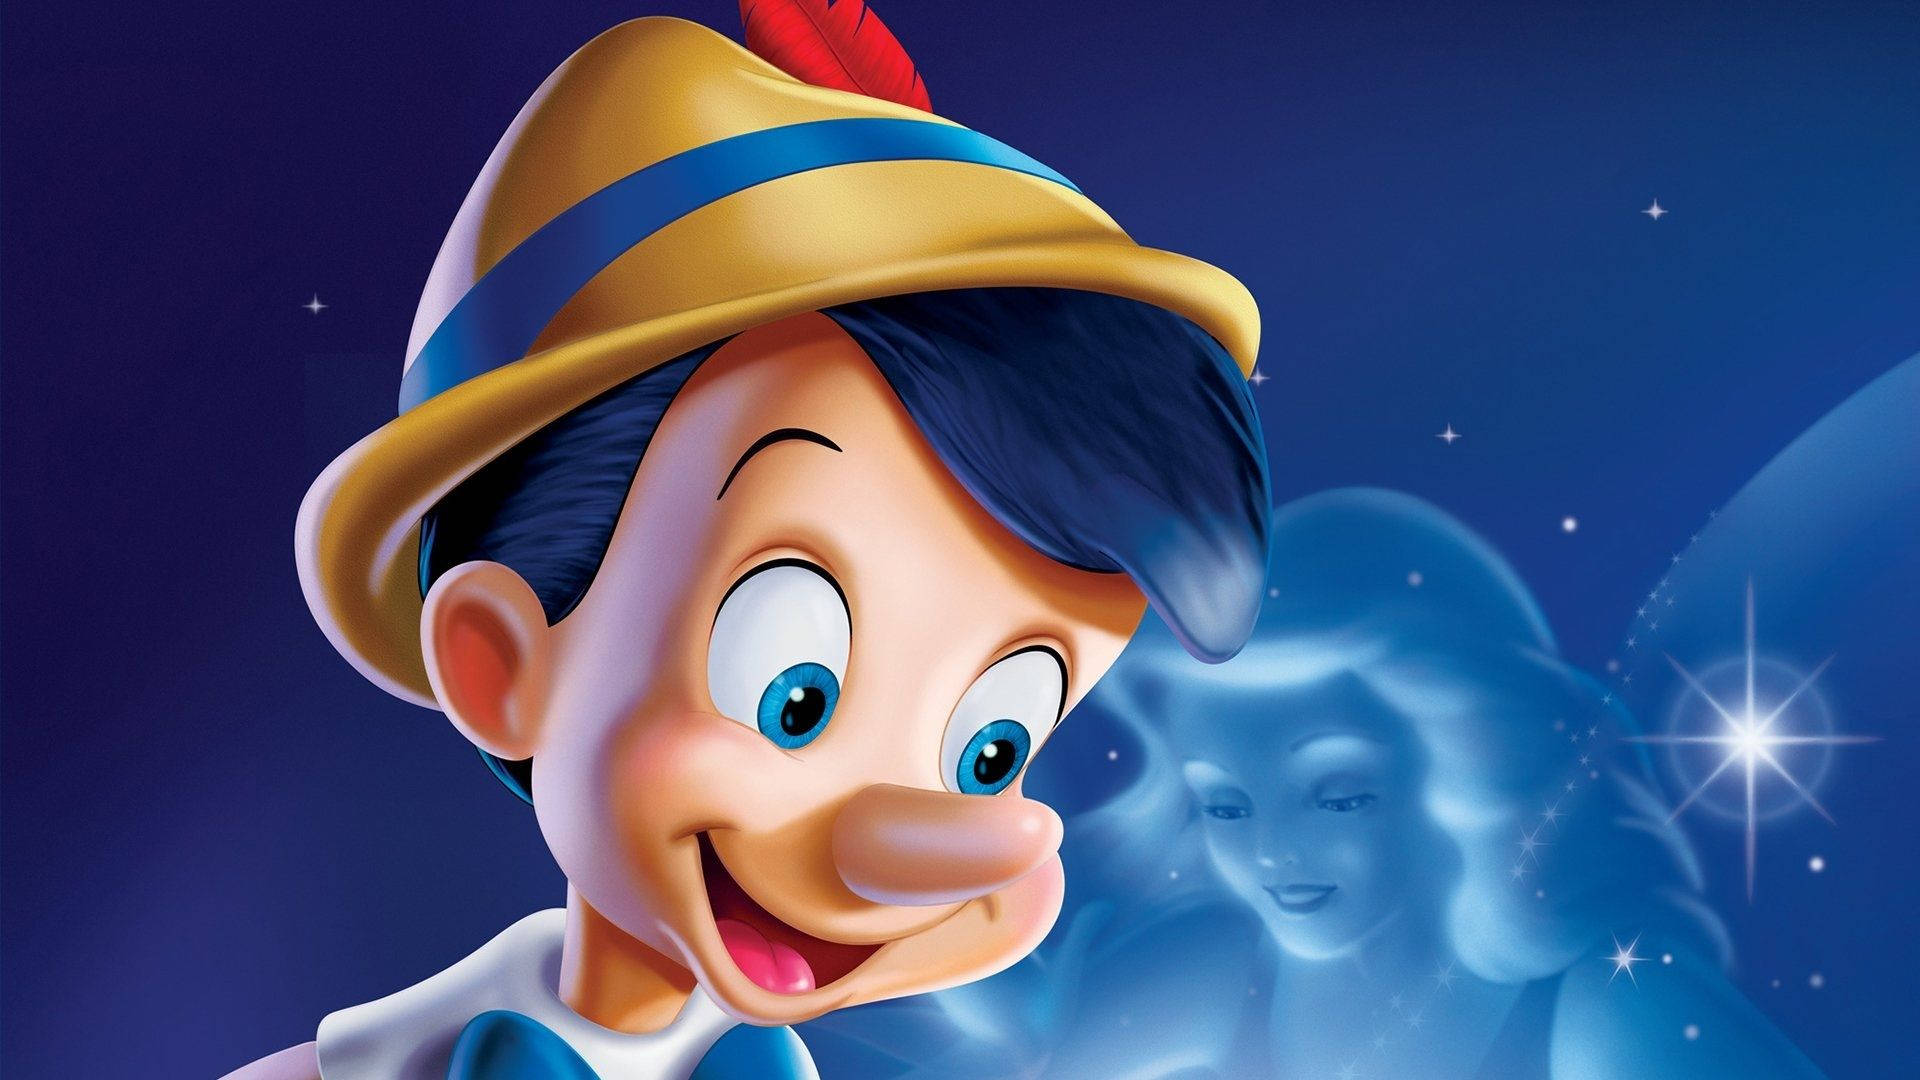 Joyful Pinocchio With A Big Smile